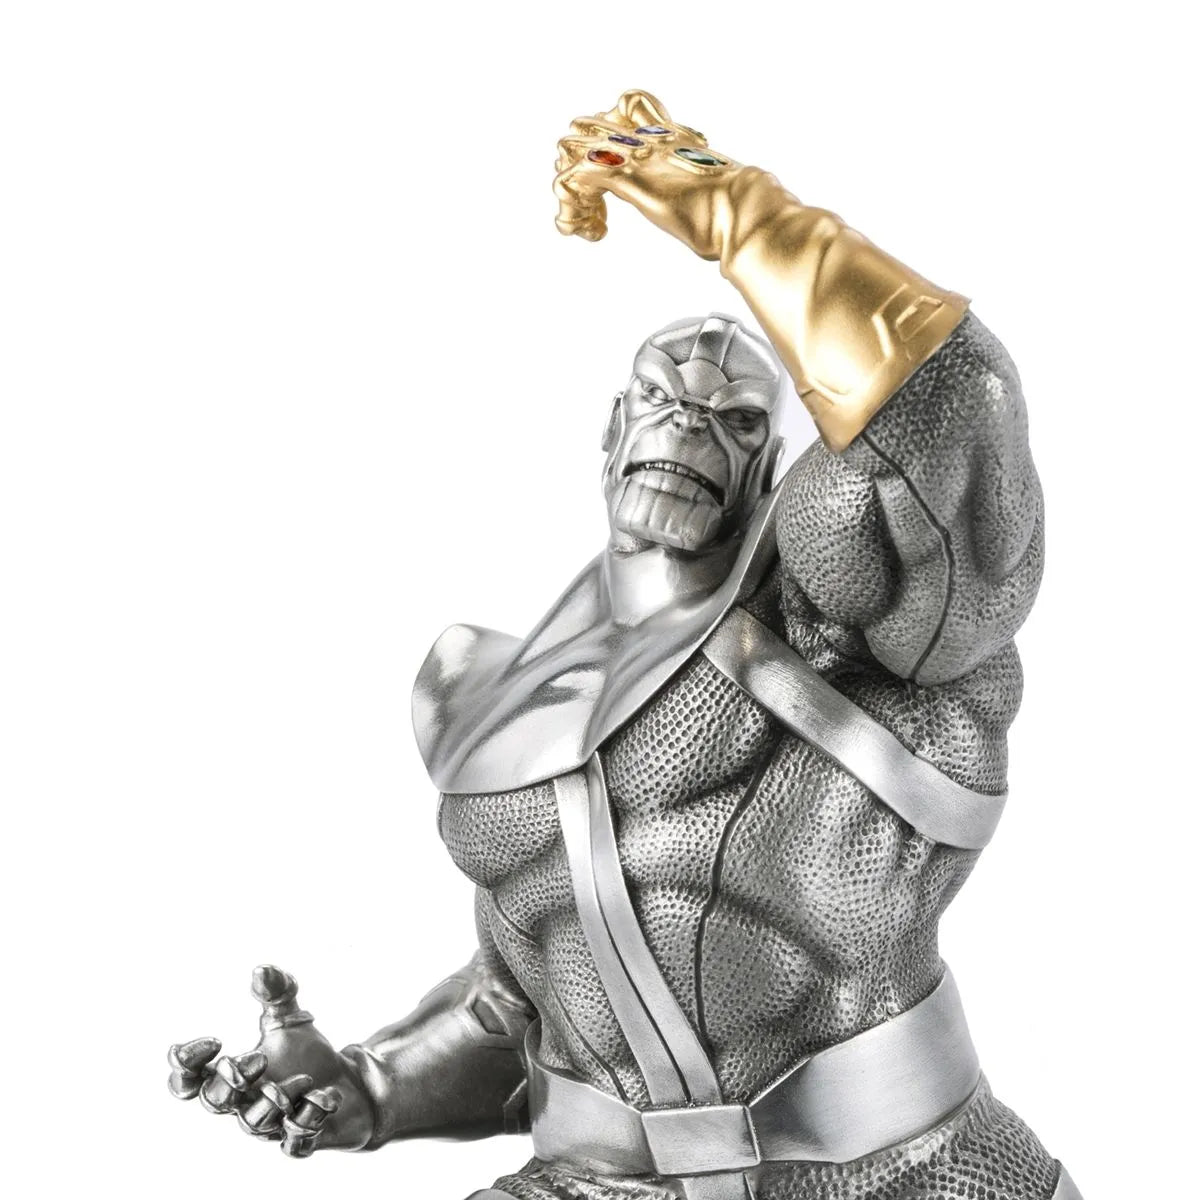 Thanos the Conqueror Limited Edition Metal Figurine by Royal Selangor -Royal Selangor - India - www.superherotoystore.com